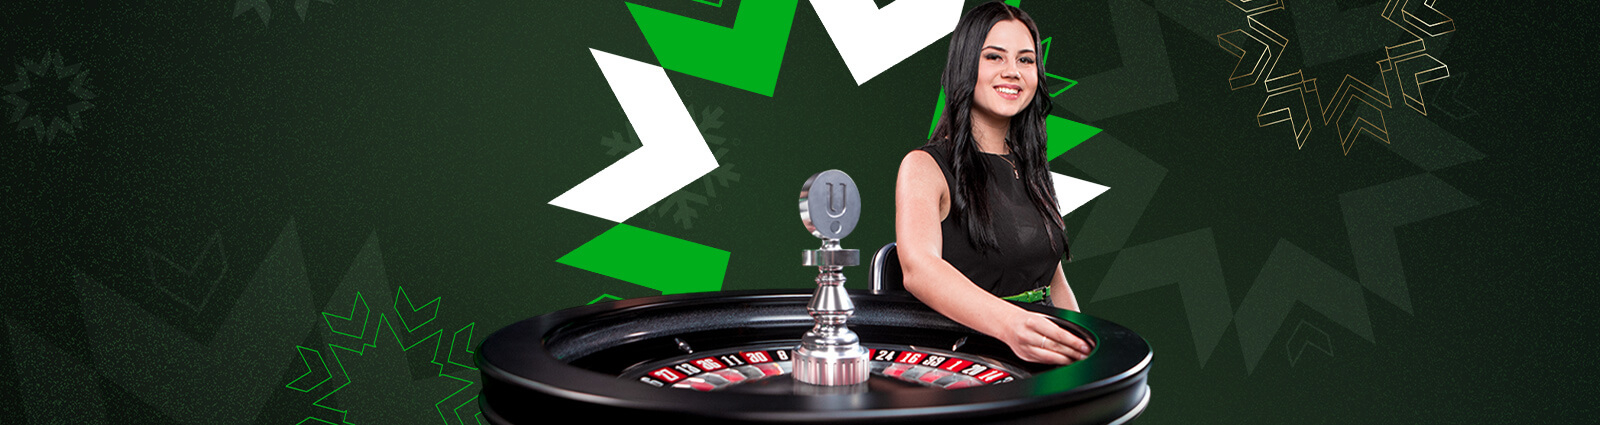 Turneu in cazinoul live Unibet – Pot de 150.000 RON cash